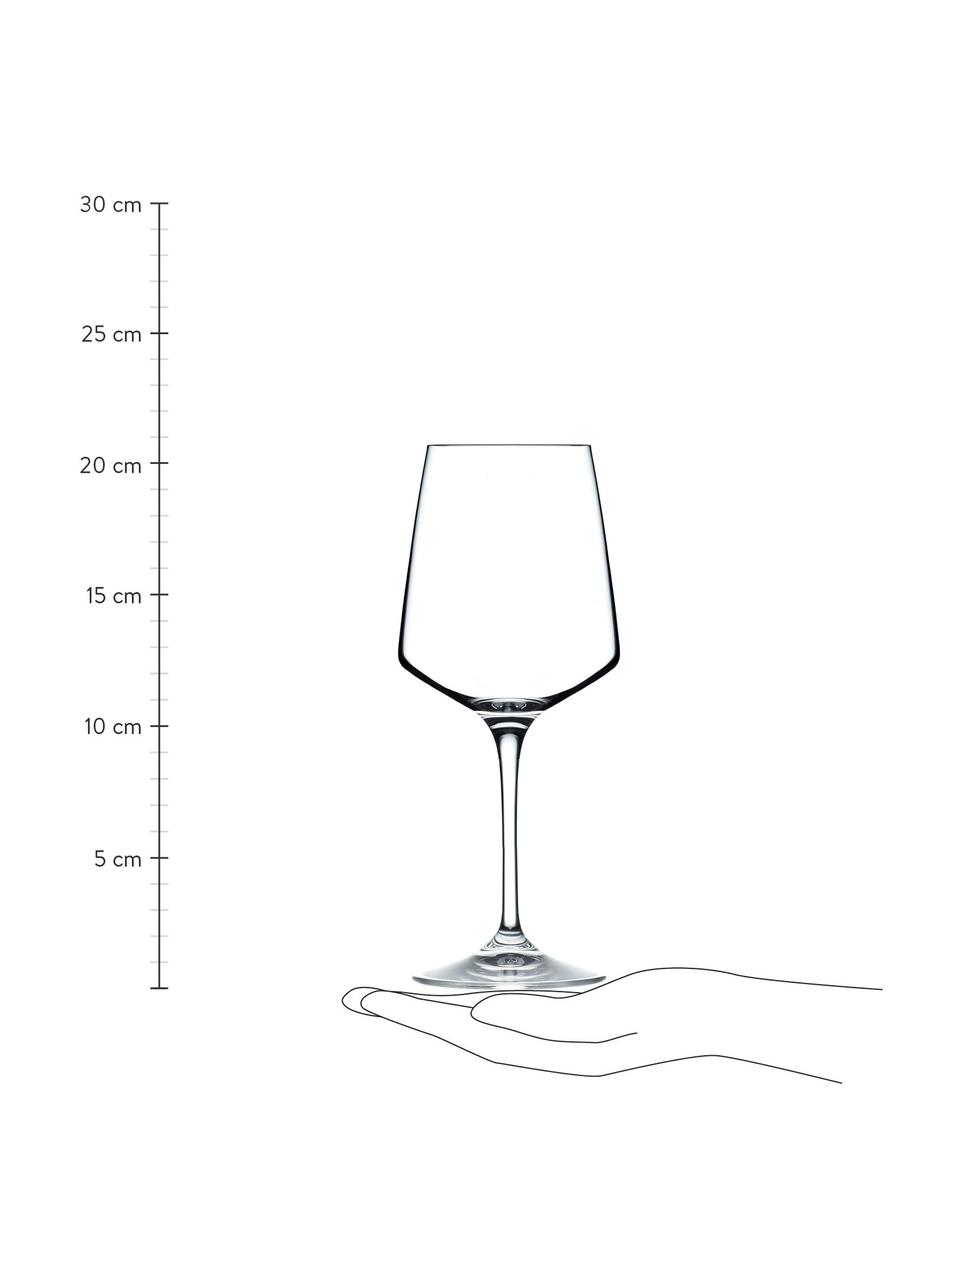 Kristallen witte wijnglazen Aria, 6 stuks, Kristalglas, Transparant, Ø 9 x H 21 cm, 386 ml